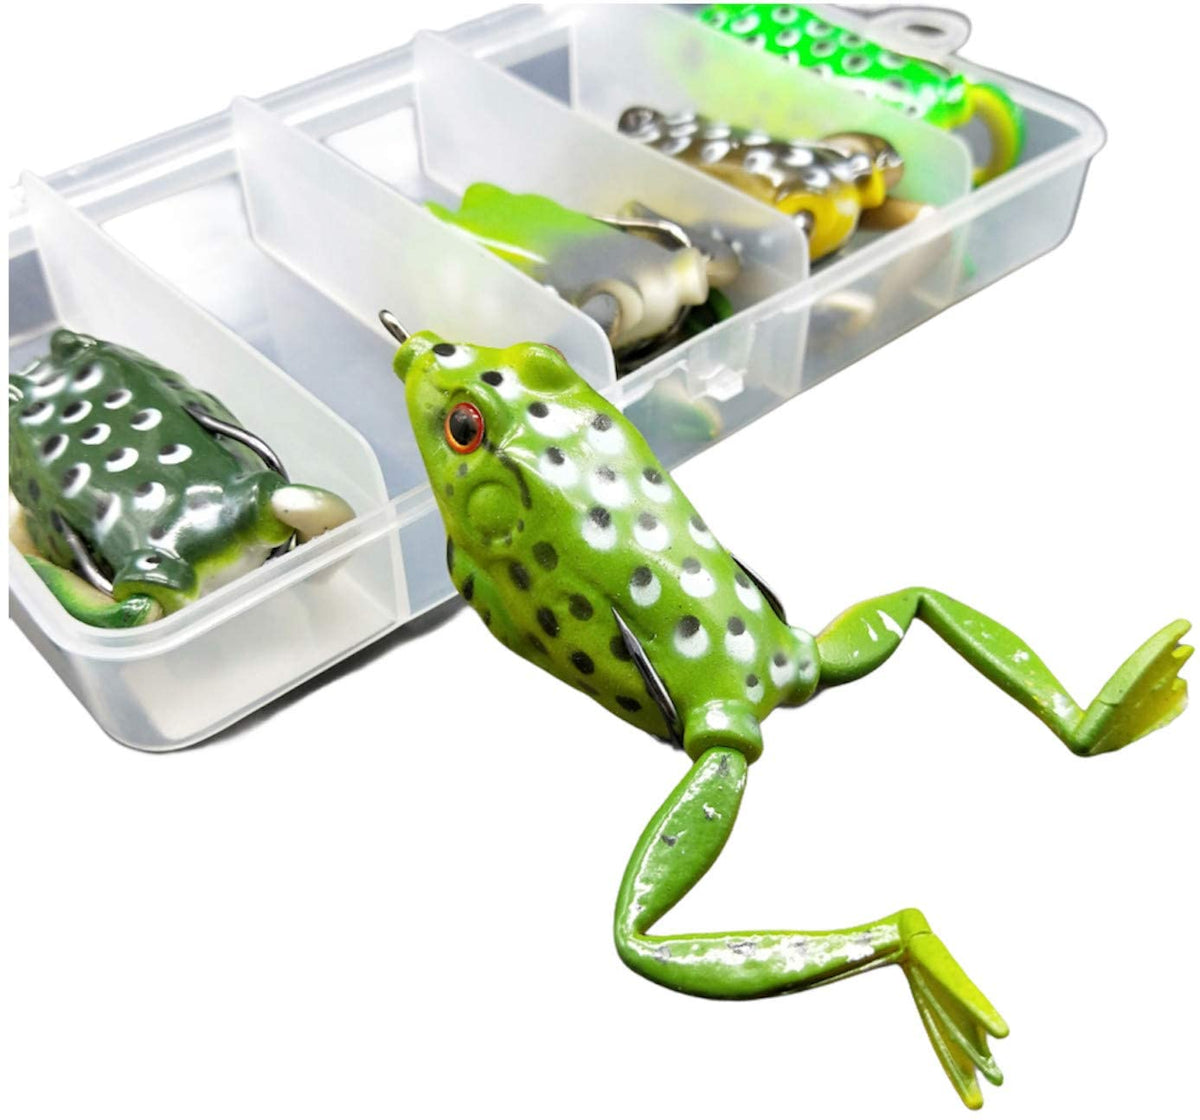 Buy Wholesale Price 5PCS New Large Frog Topwater Fishing Lure